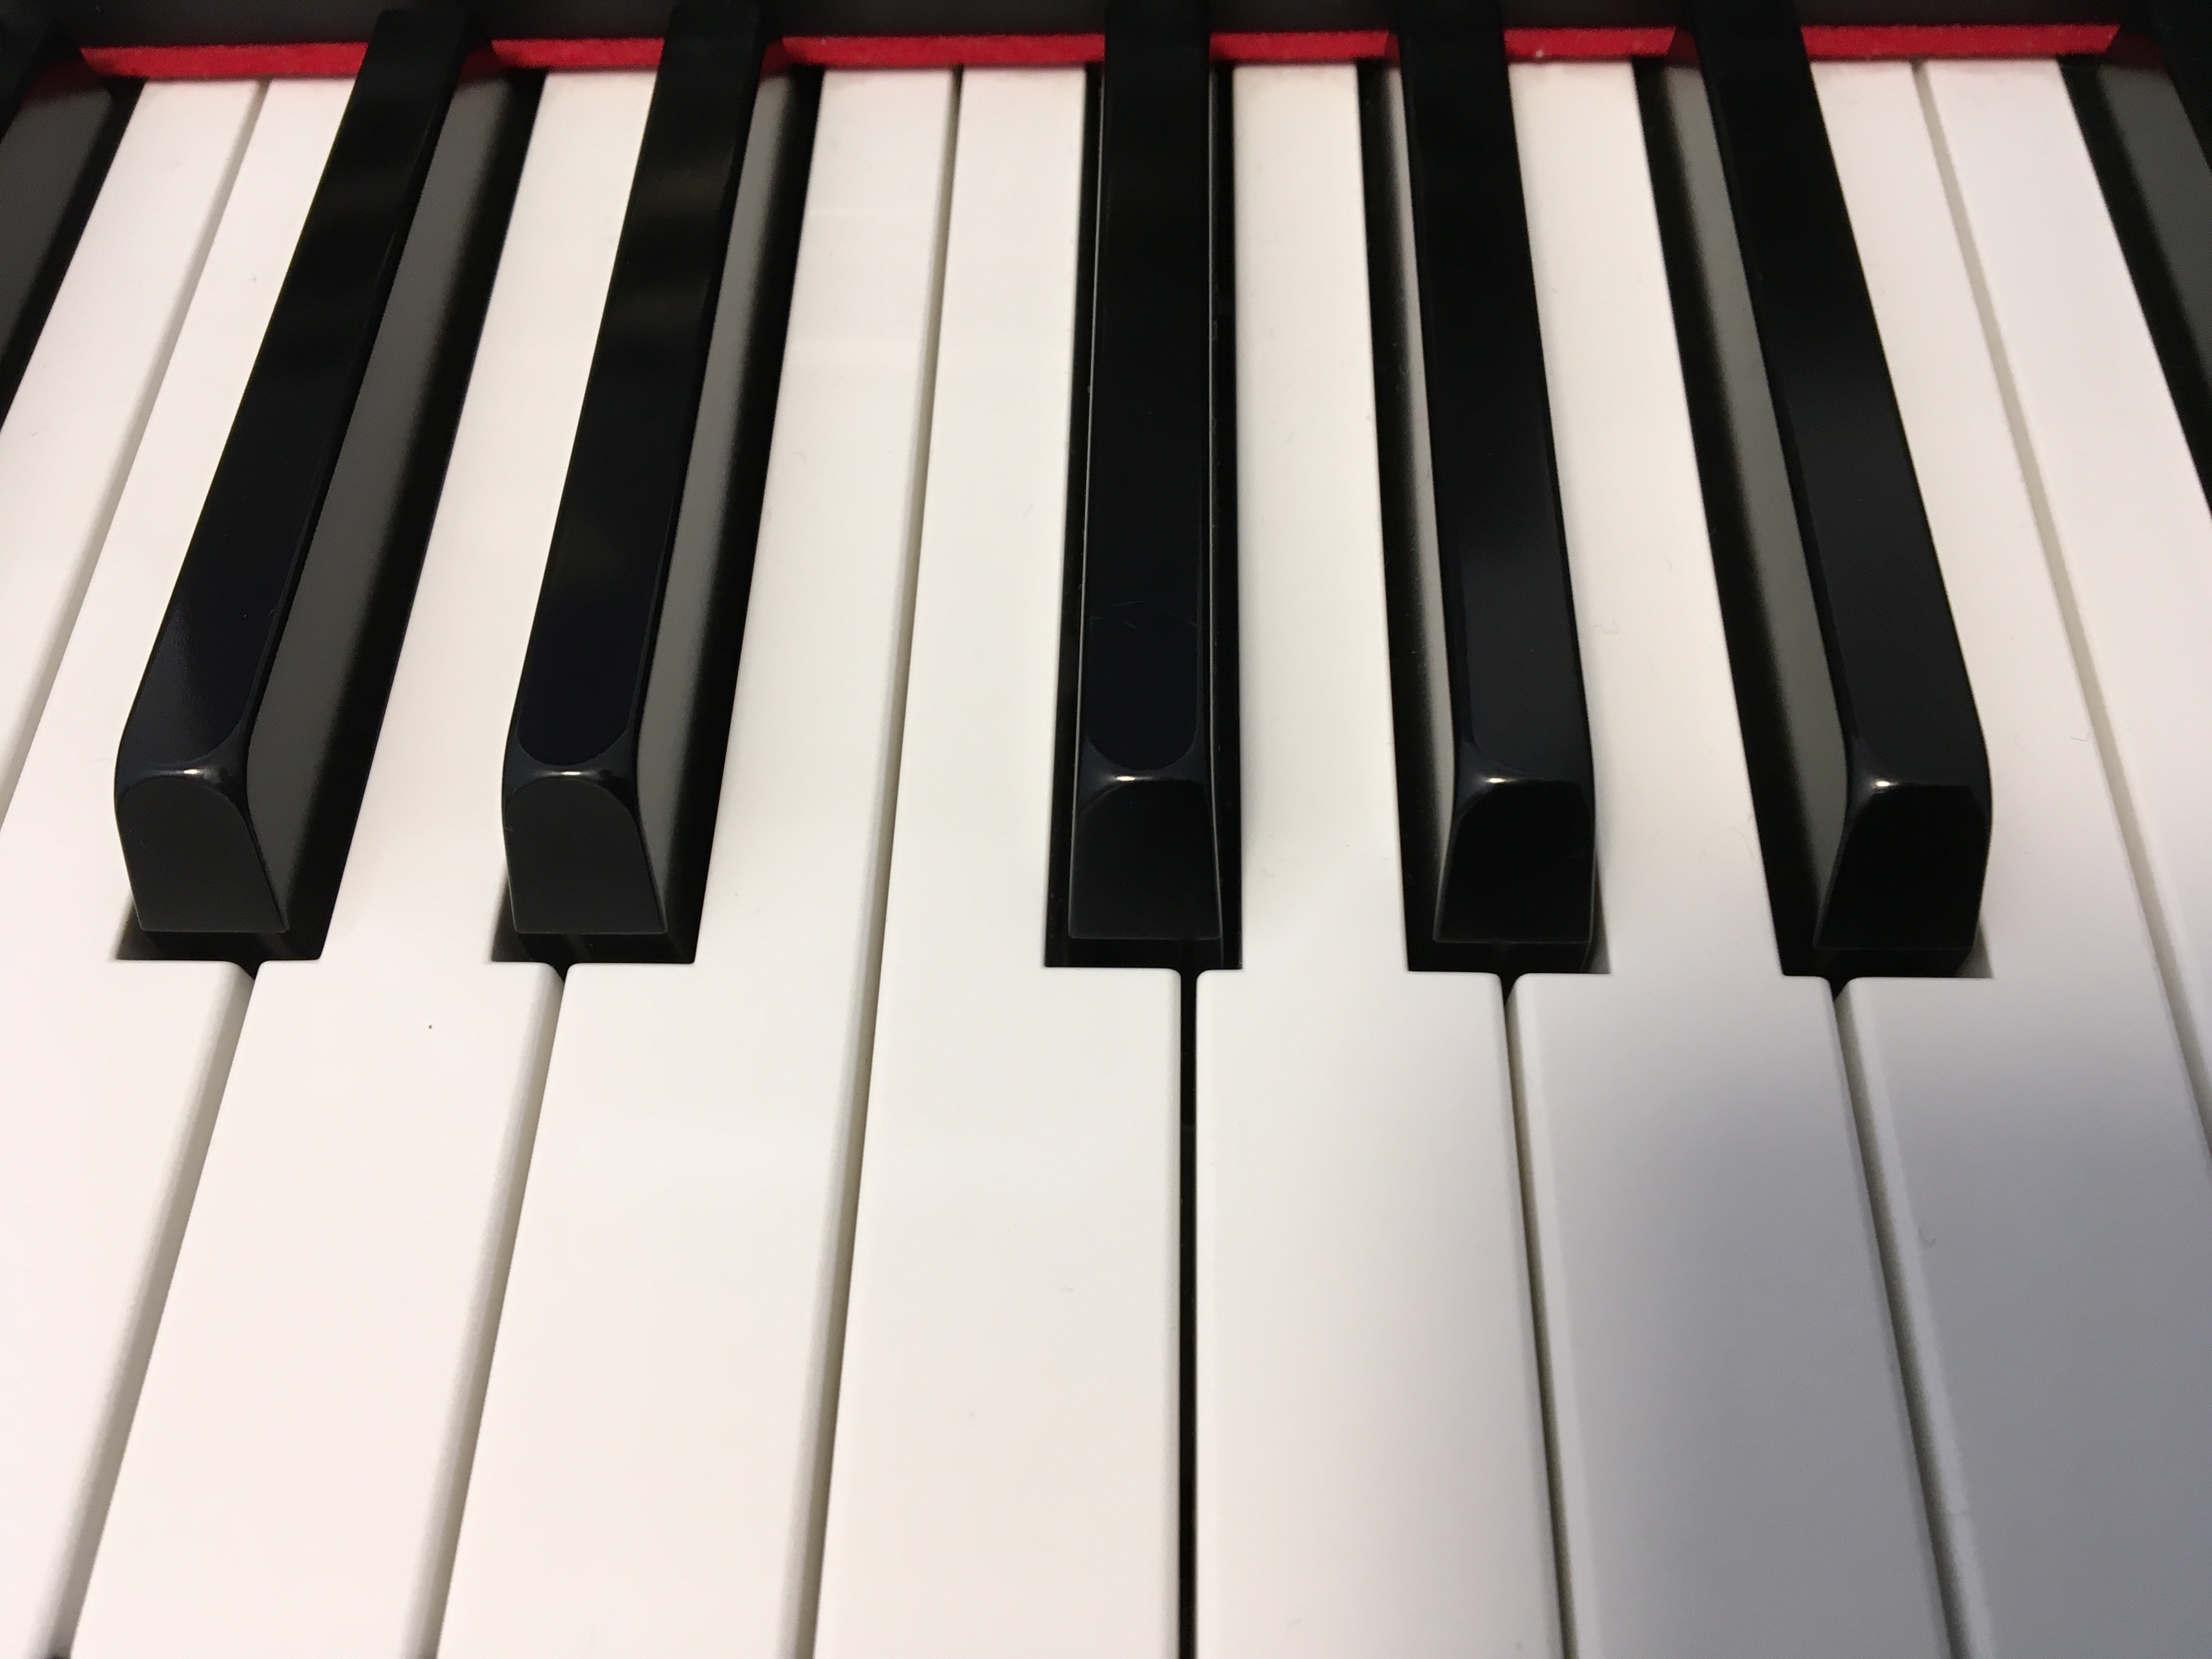 Klavierunterricht Musik